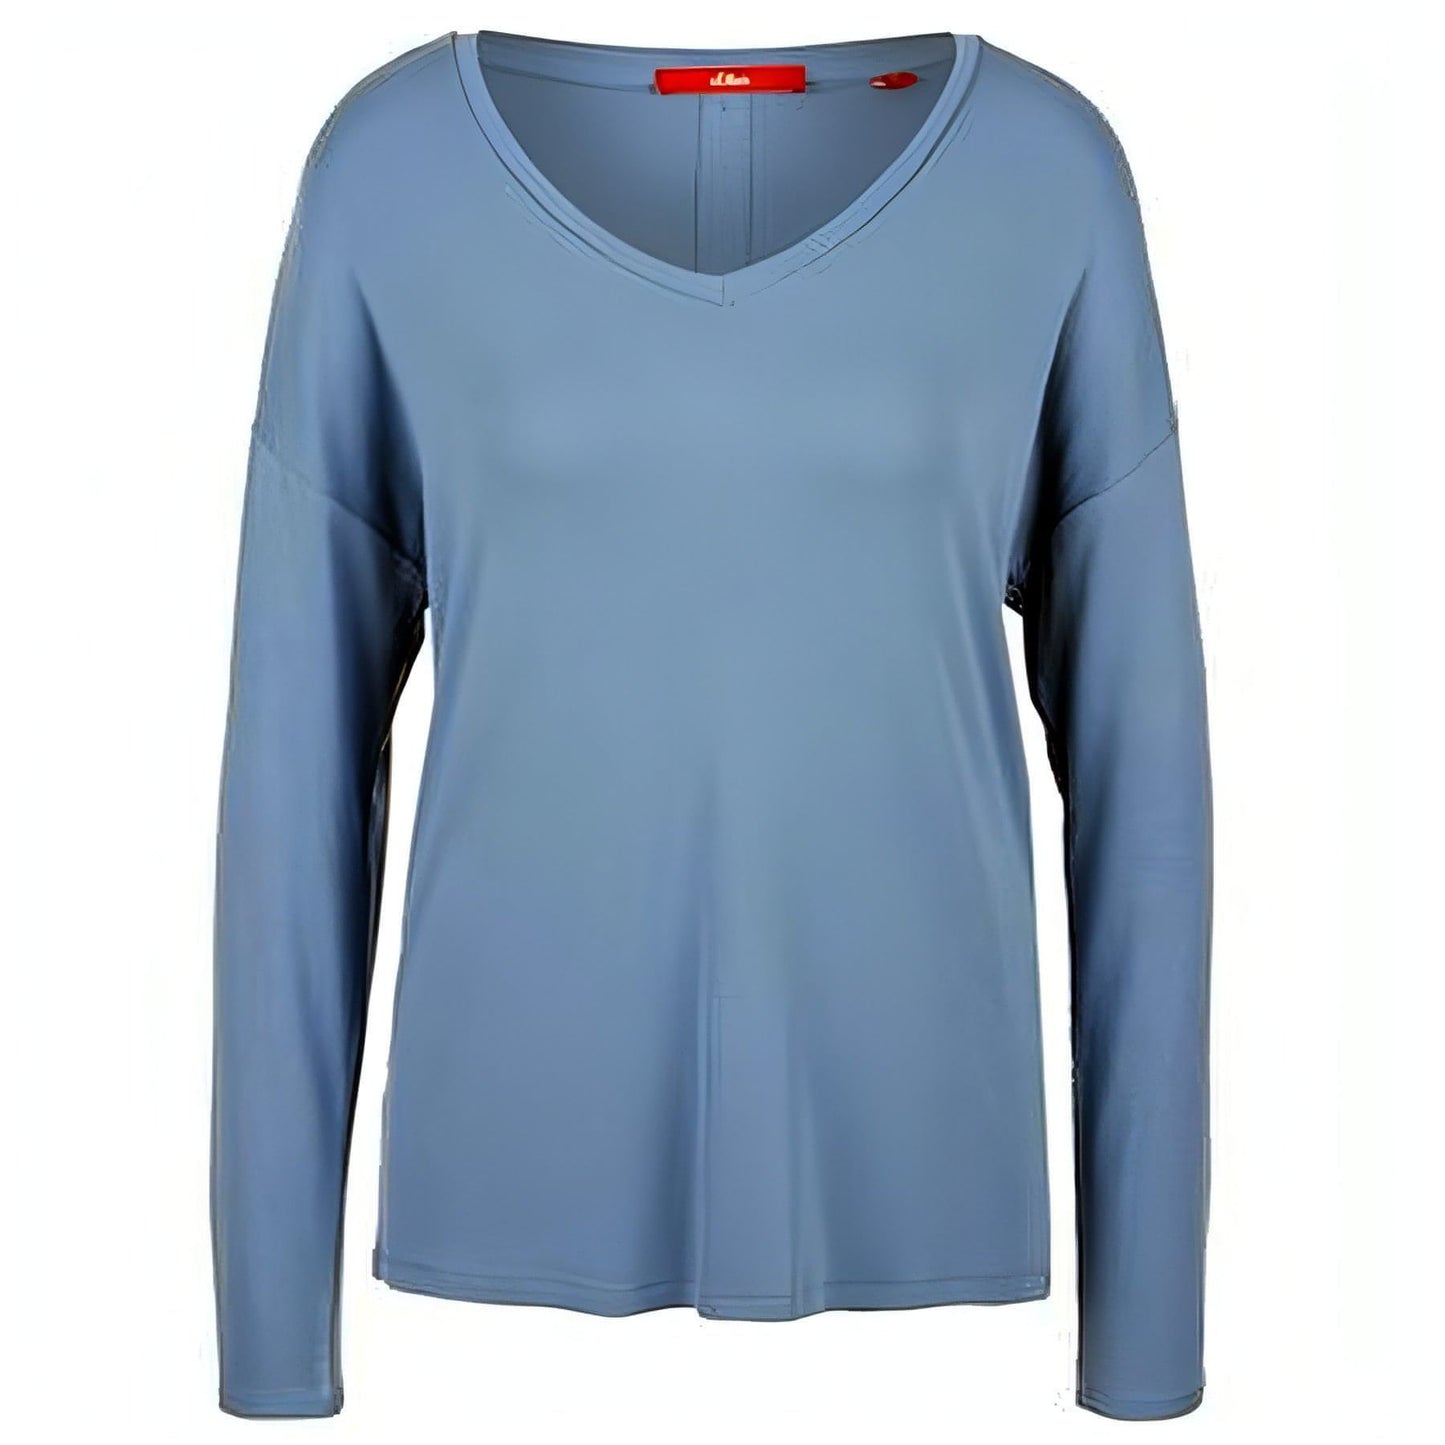 S. OLIVER mėlynas moteriškas megztinis